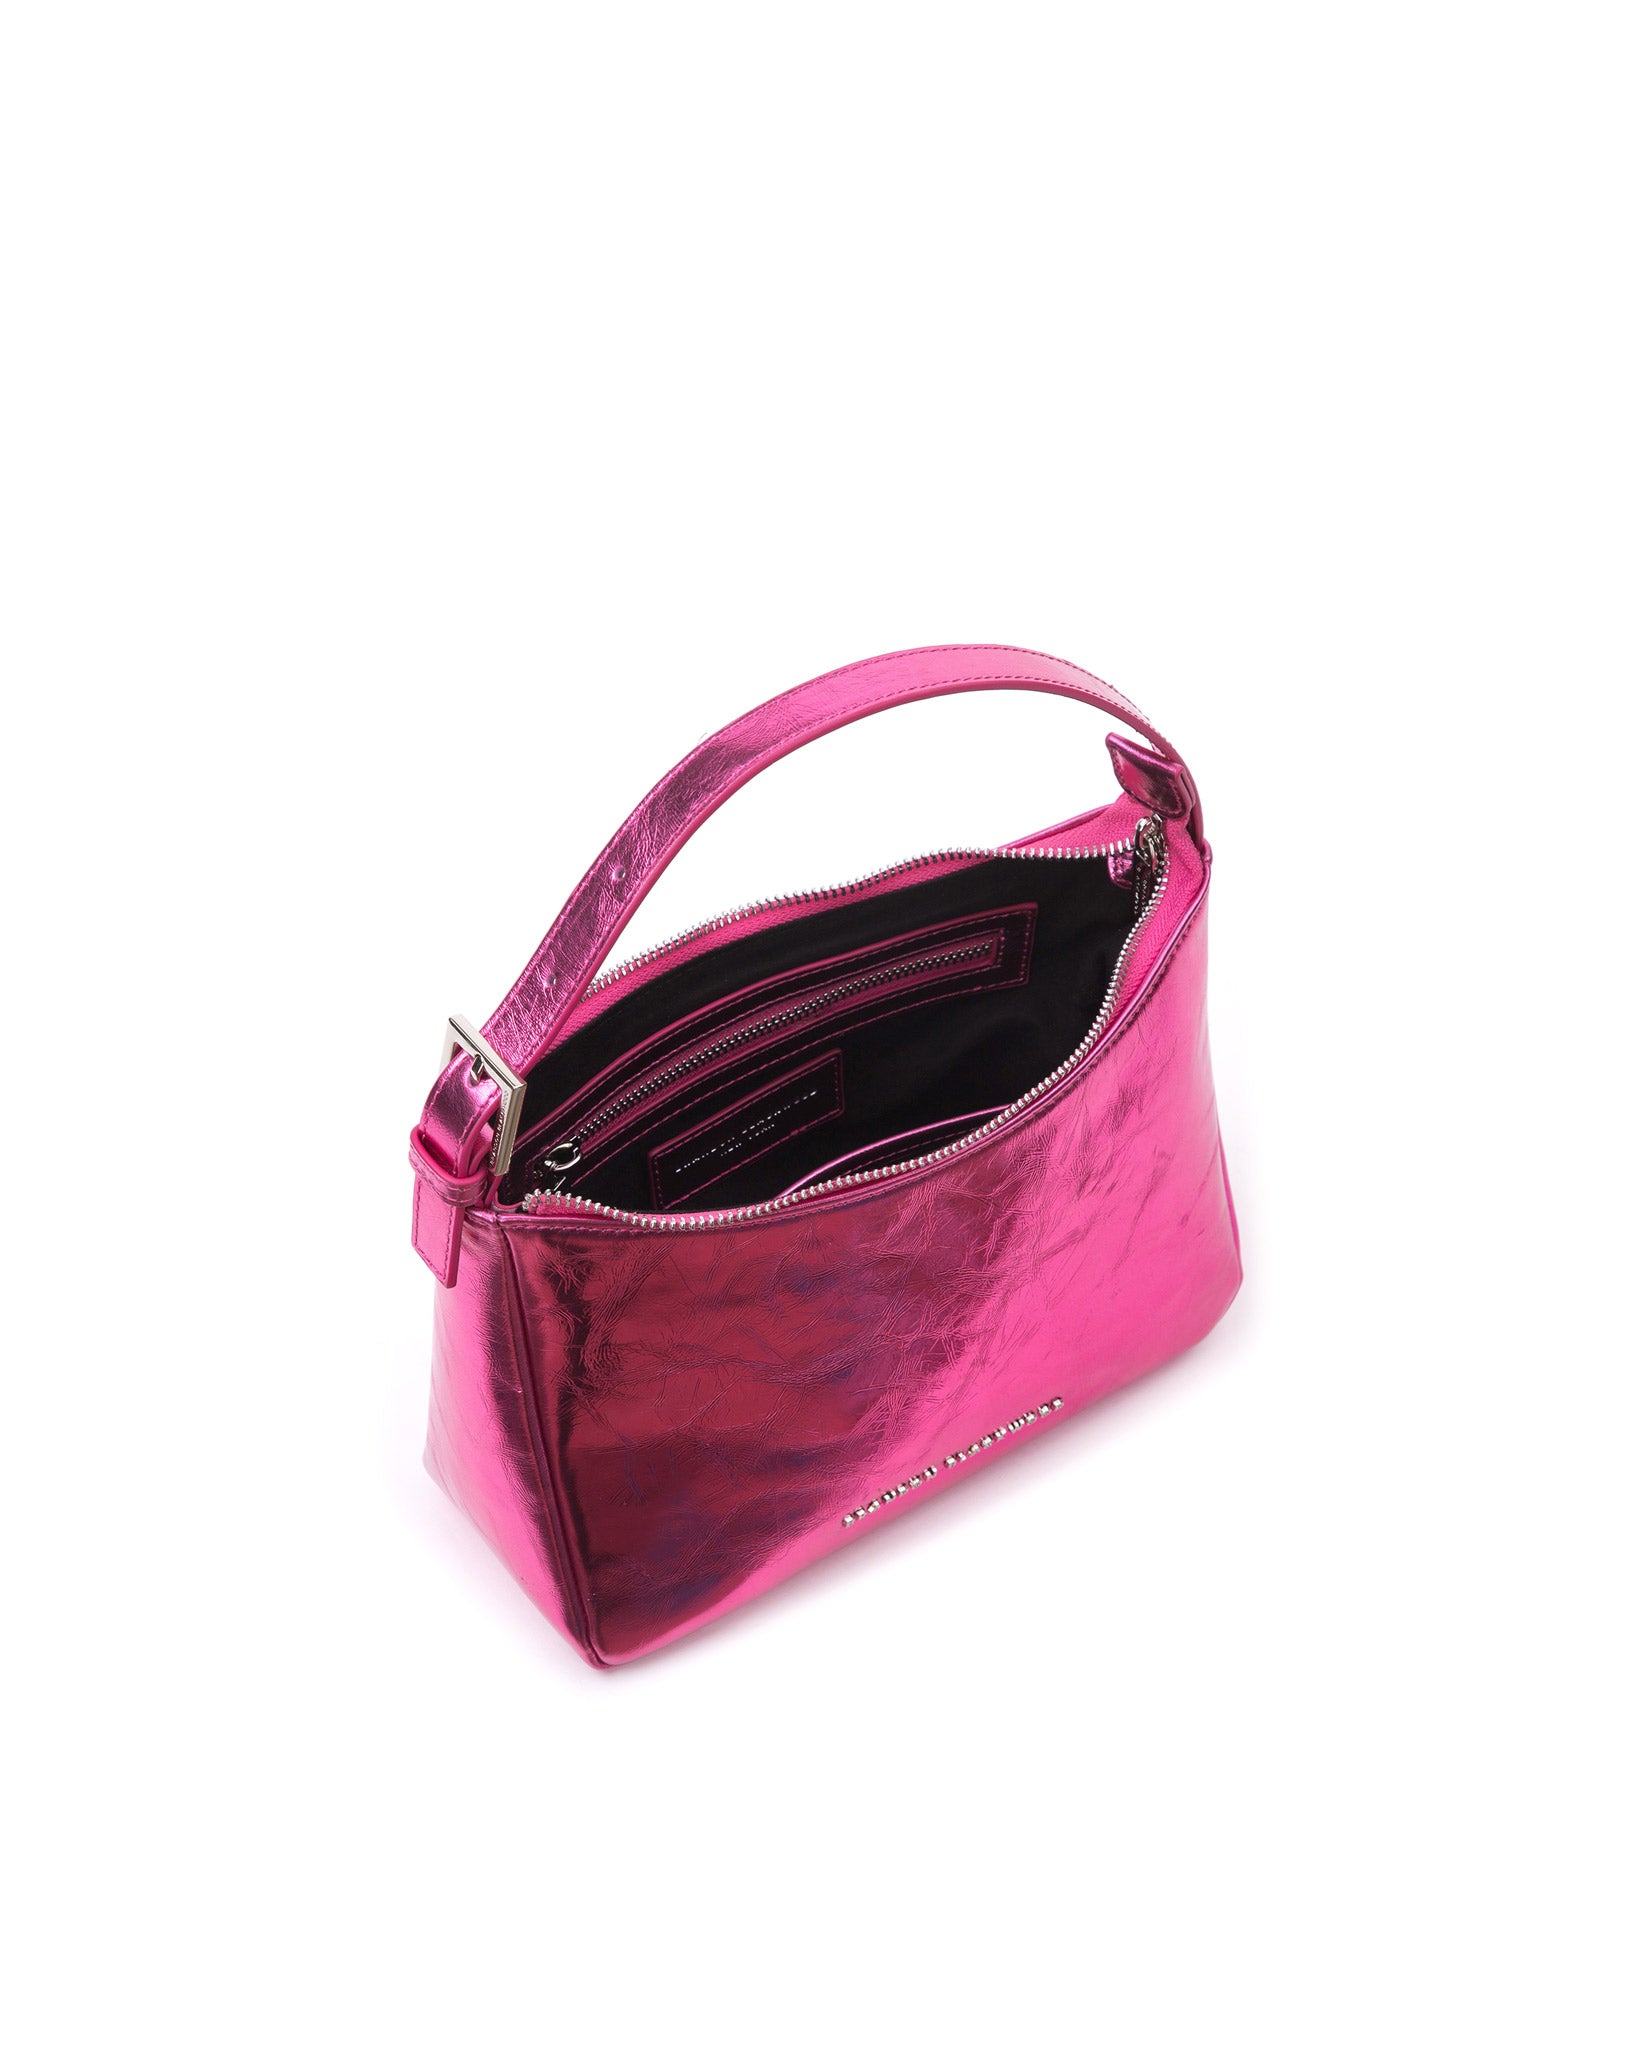 Brandon Blackwood New York - Cortni Bag - Cracked Metallic Hot Pink Leather